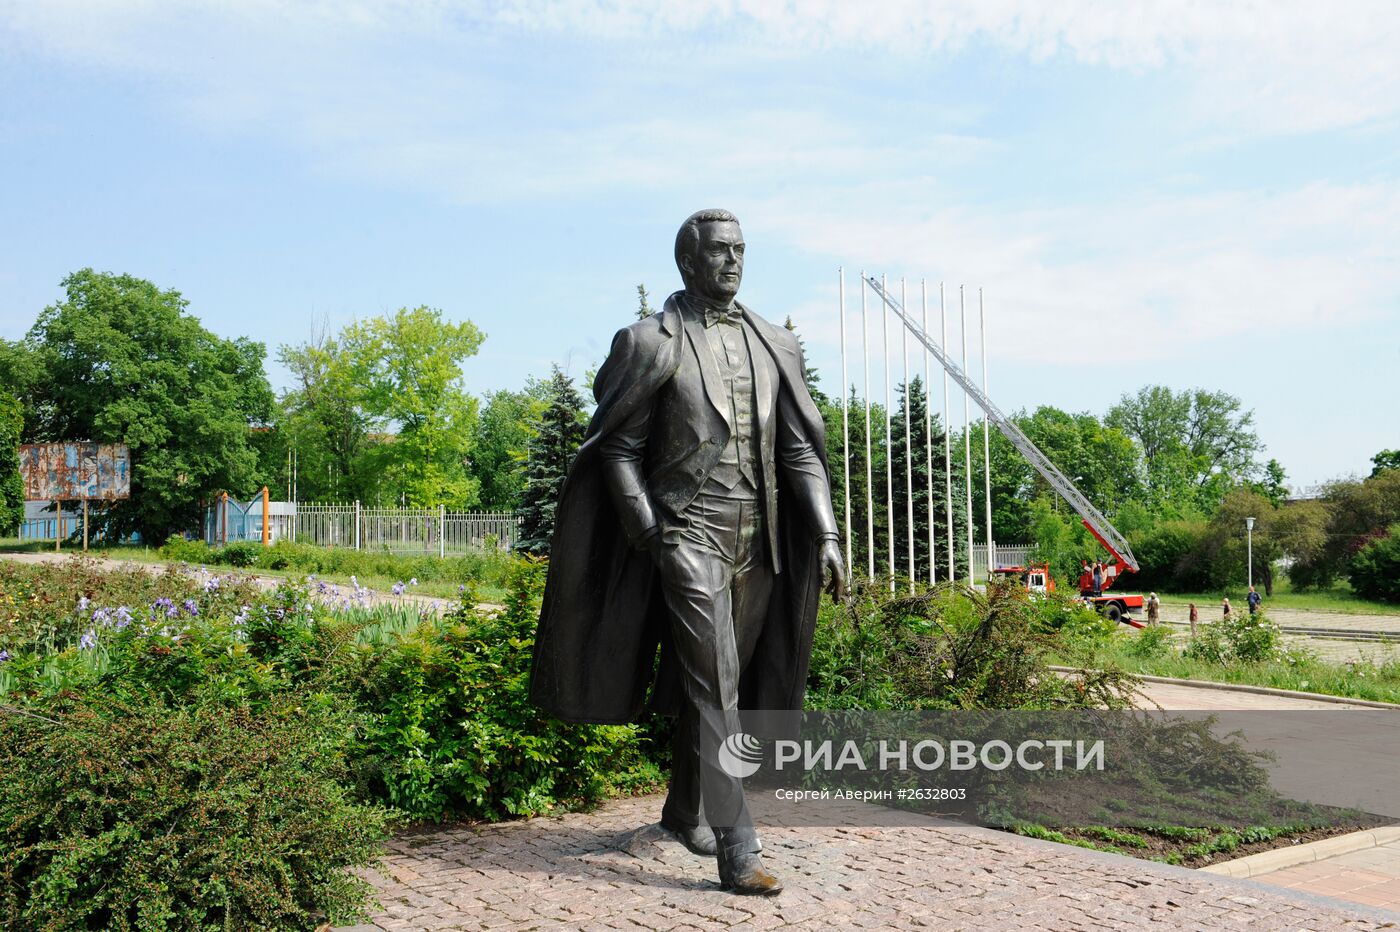 Депутат Госдумы РФ, певец Иосиф Кобзон посетил Донецк